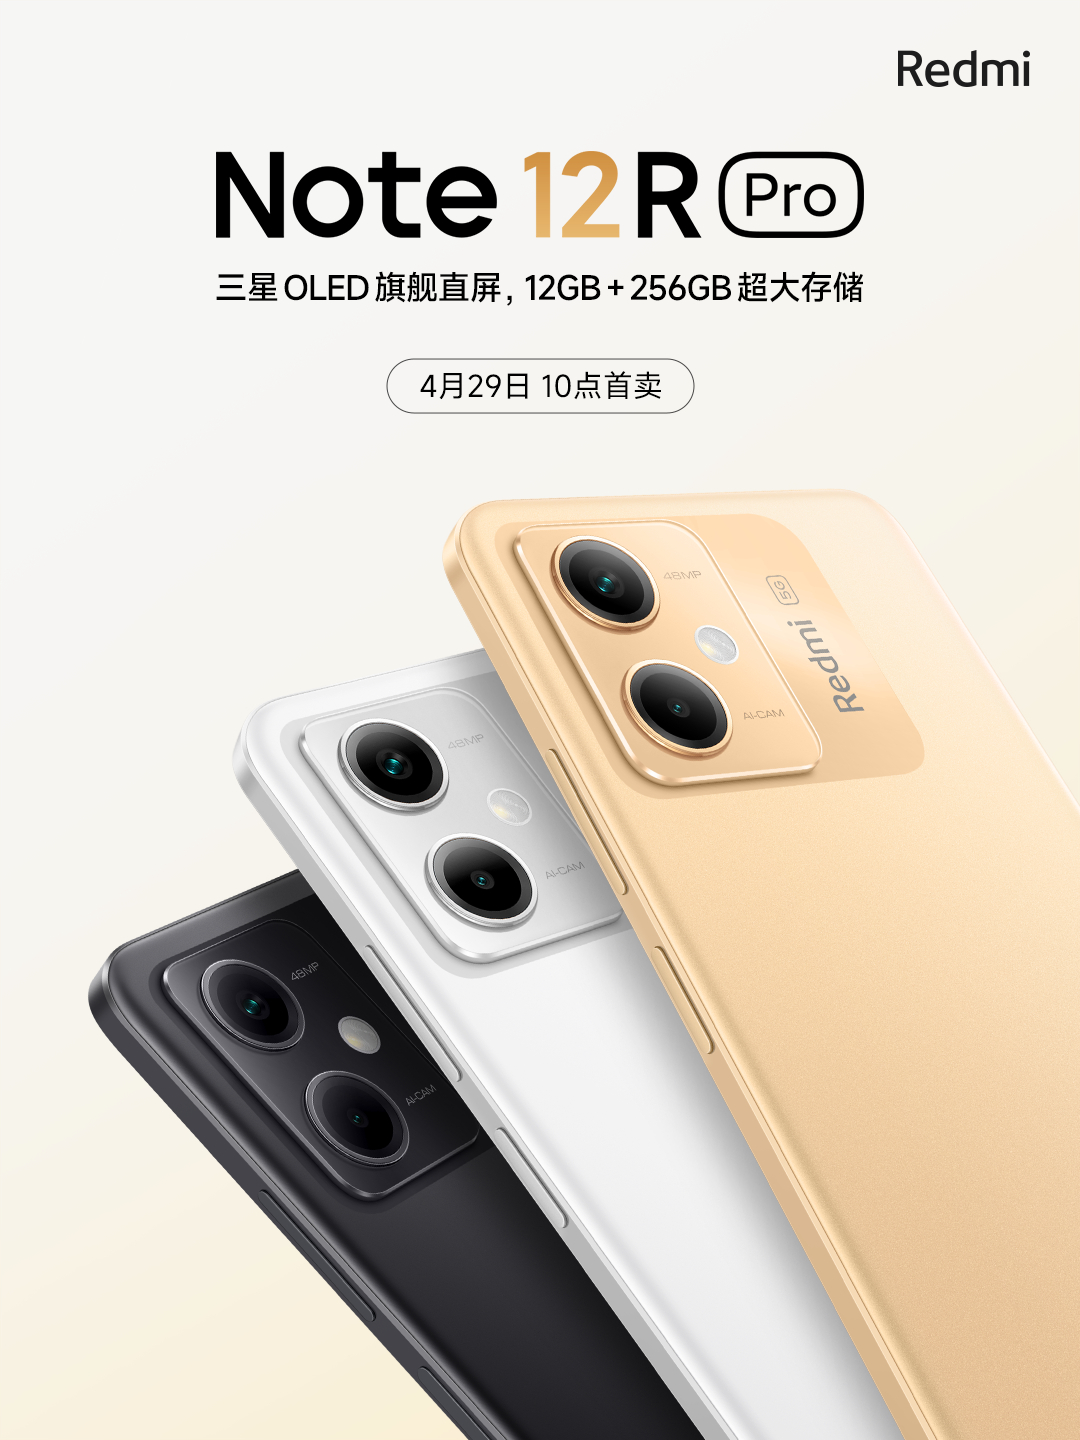 смартфон Redmi Note 12R Pro 